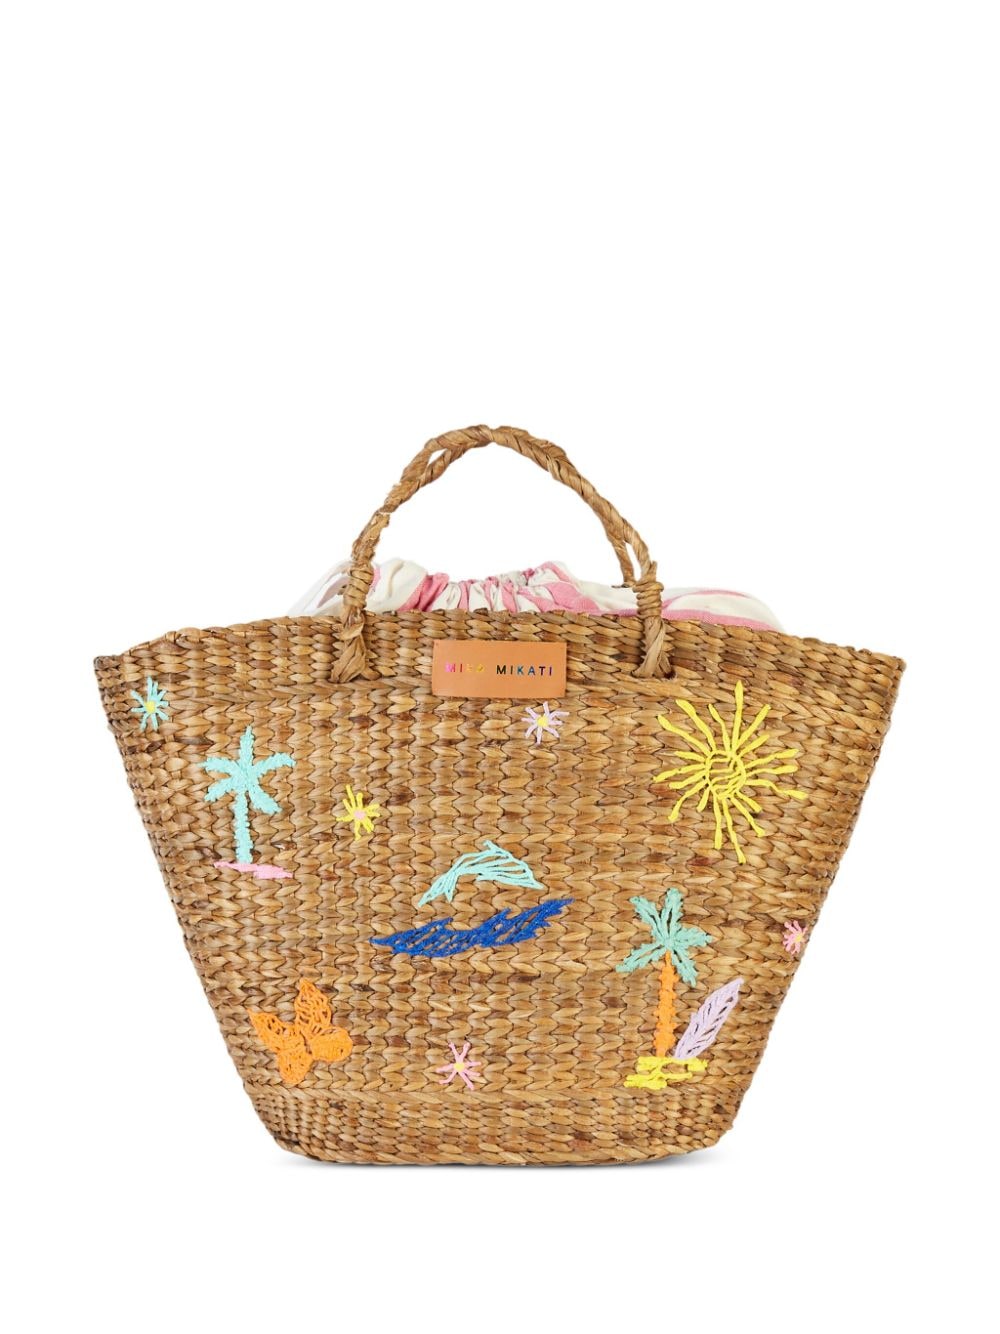 Mira Mikati Embroidered Beach Bag In Neutrals